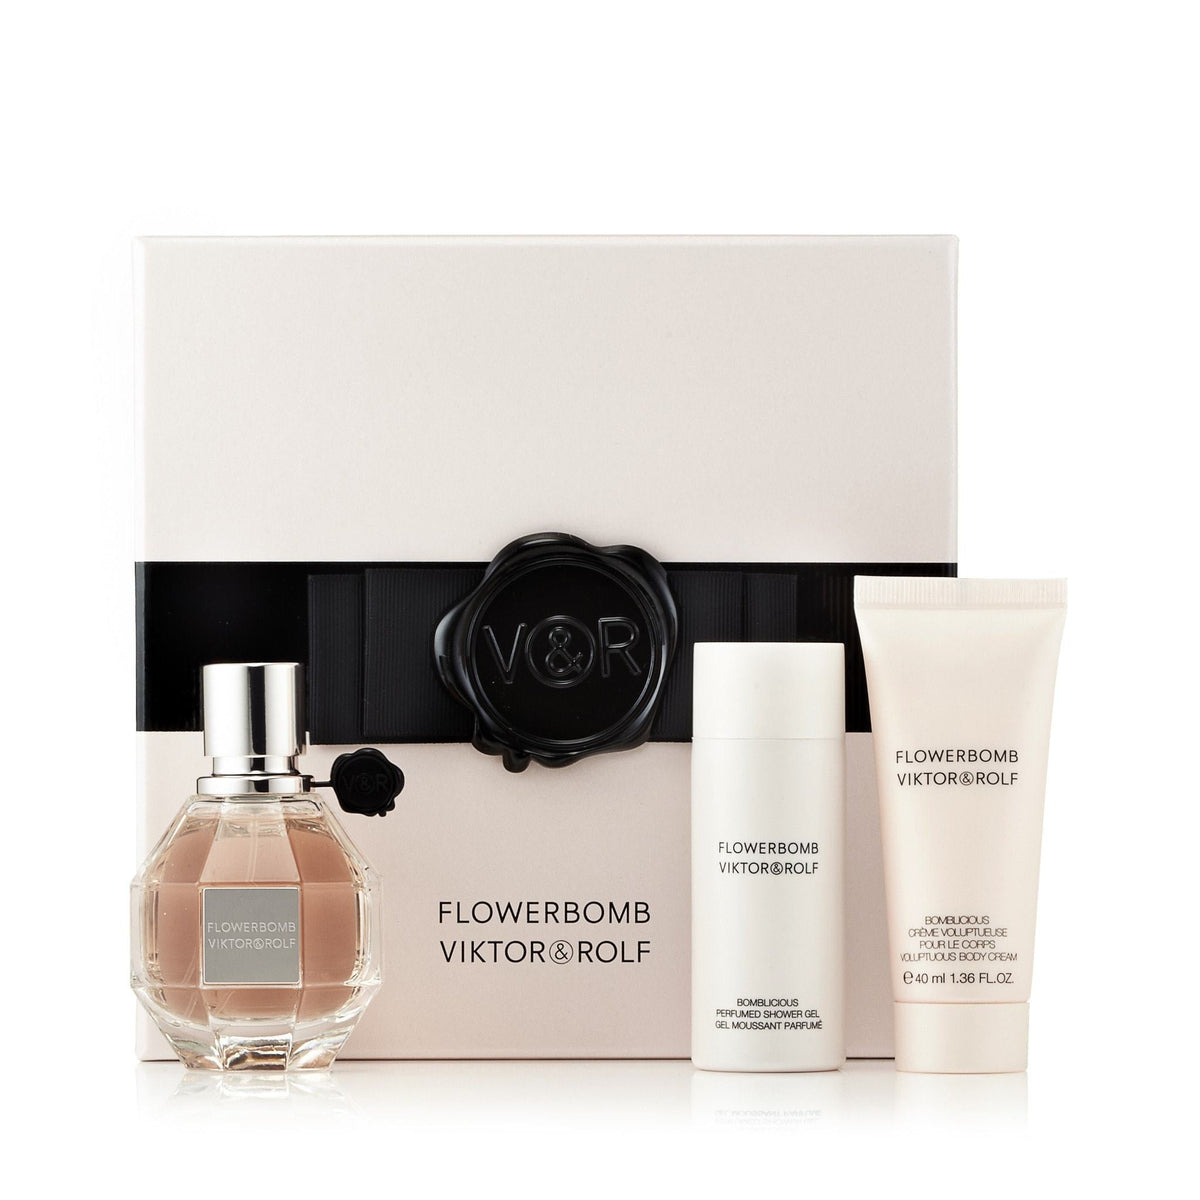 Flowerbomb Eau de Parfum Gift Set for Women by Viktor & Rolf 1.7 oz.